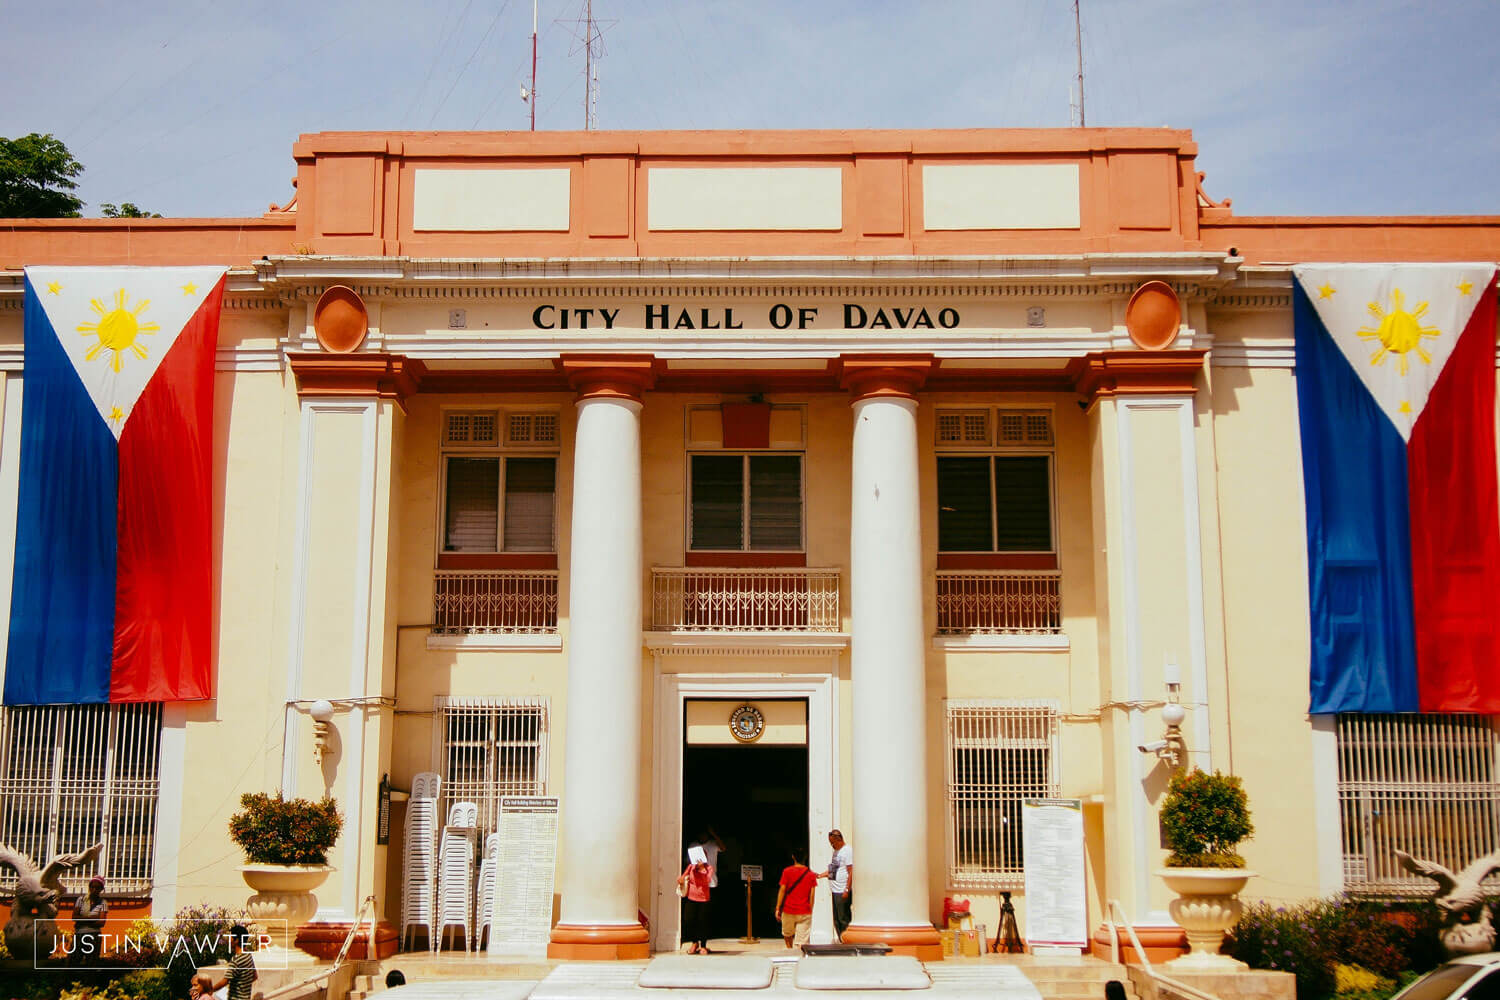 City-Hall-of-Davao-1.jpg